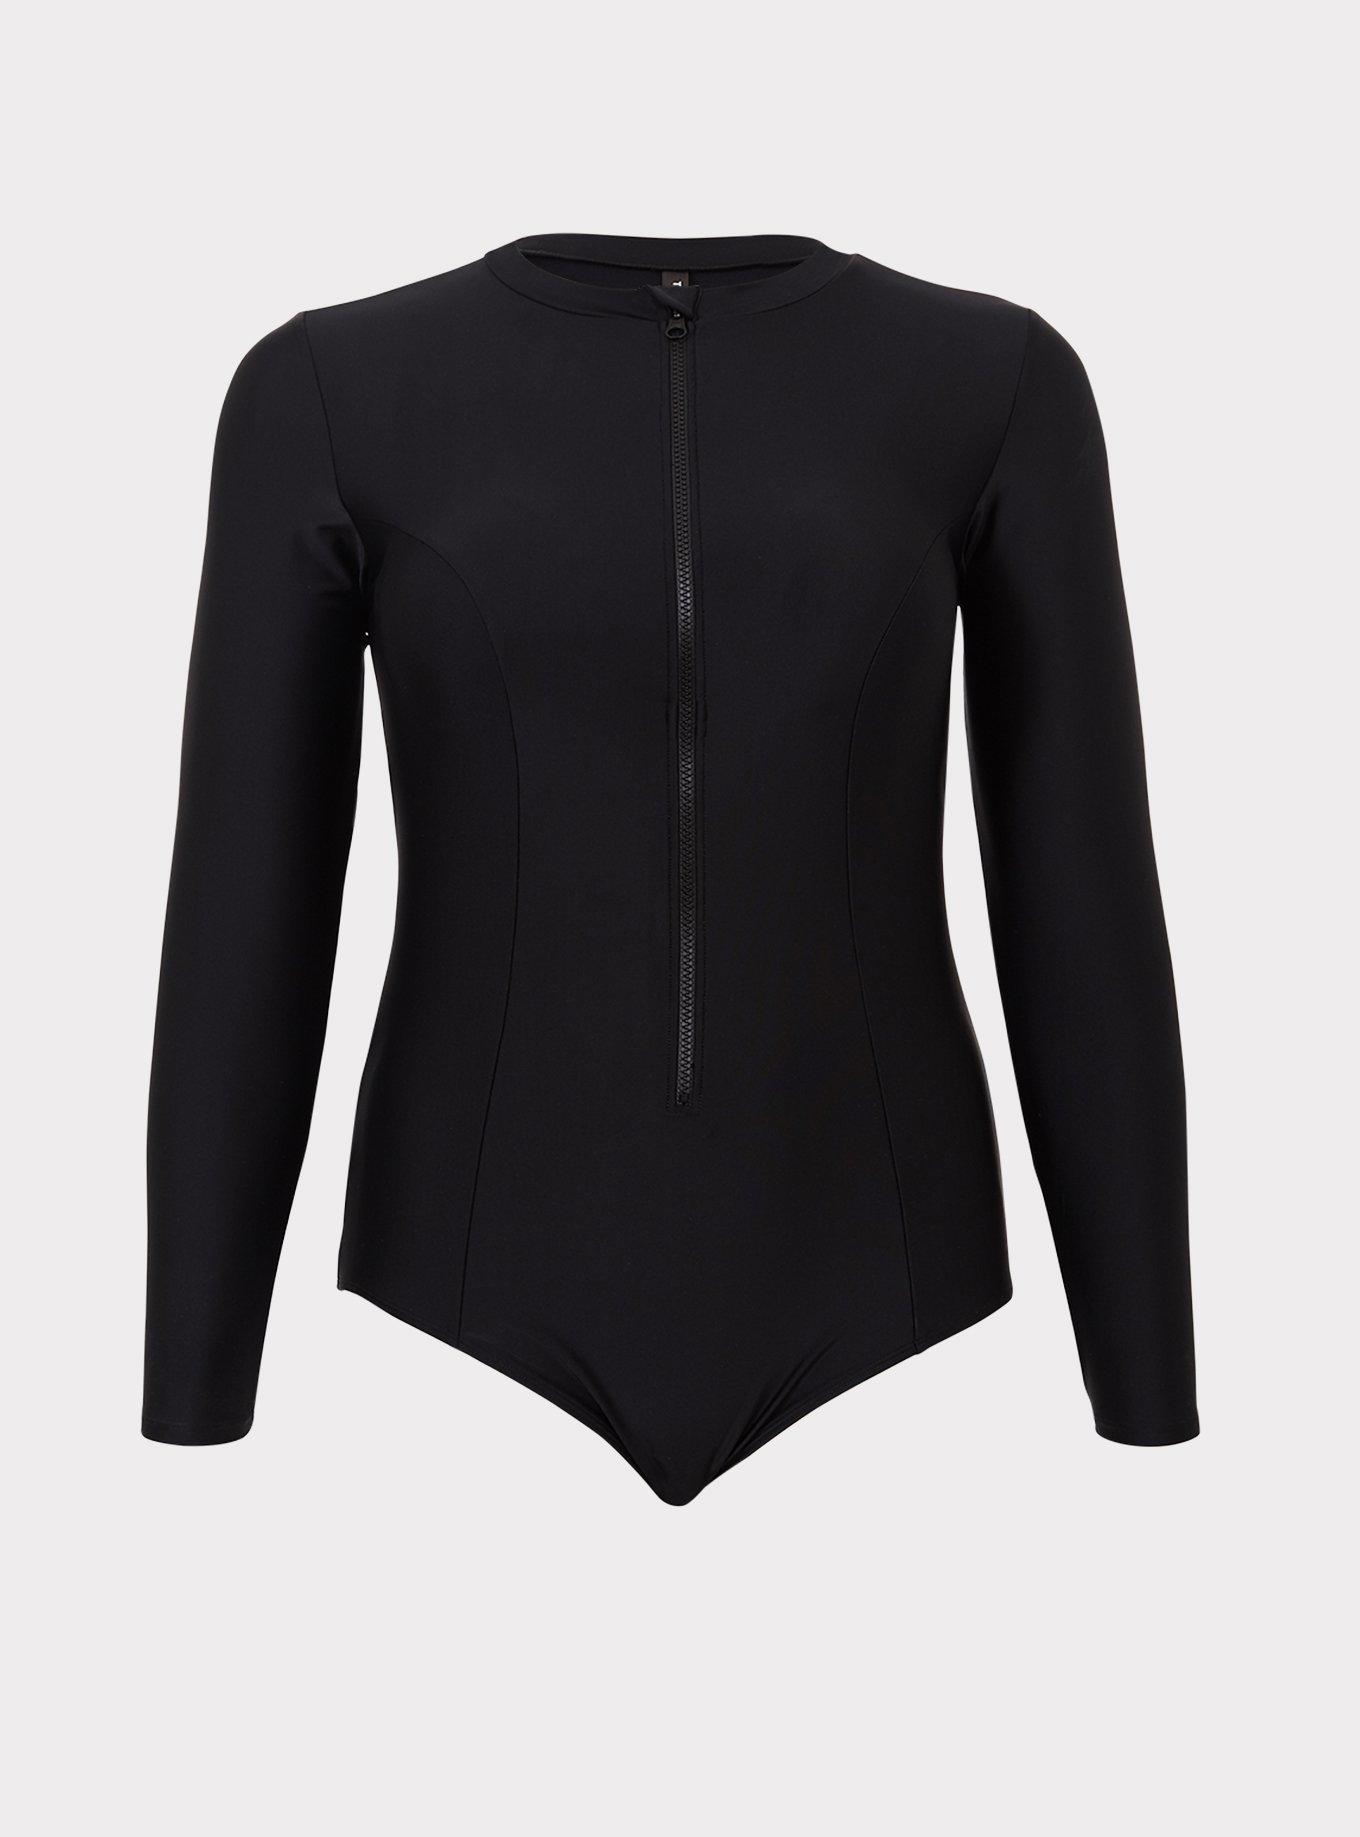 Plus Size Black Two-piece Separate Swimsuit Women Summer Long Sleeve Rash  Guard Swimwear BBW Zipper High Waist Bathing Suits - AliExpress